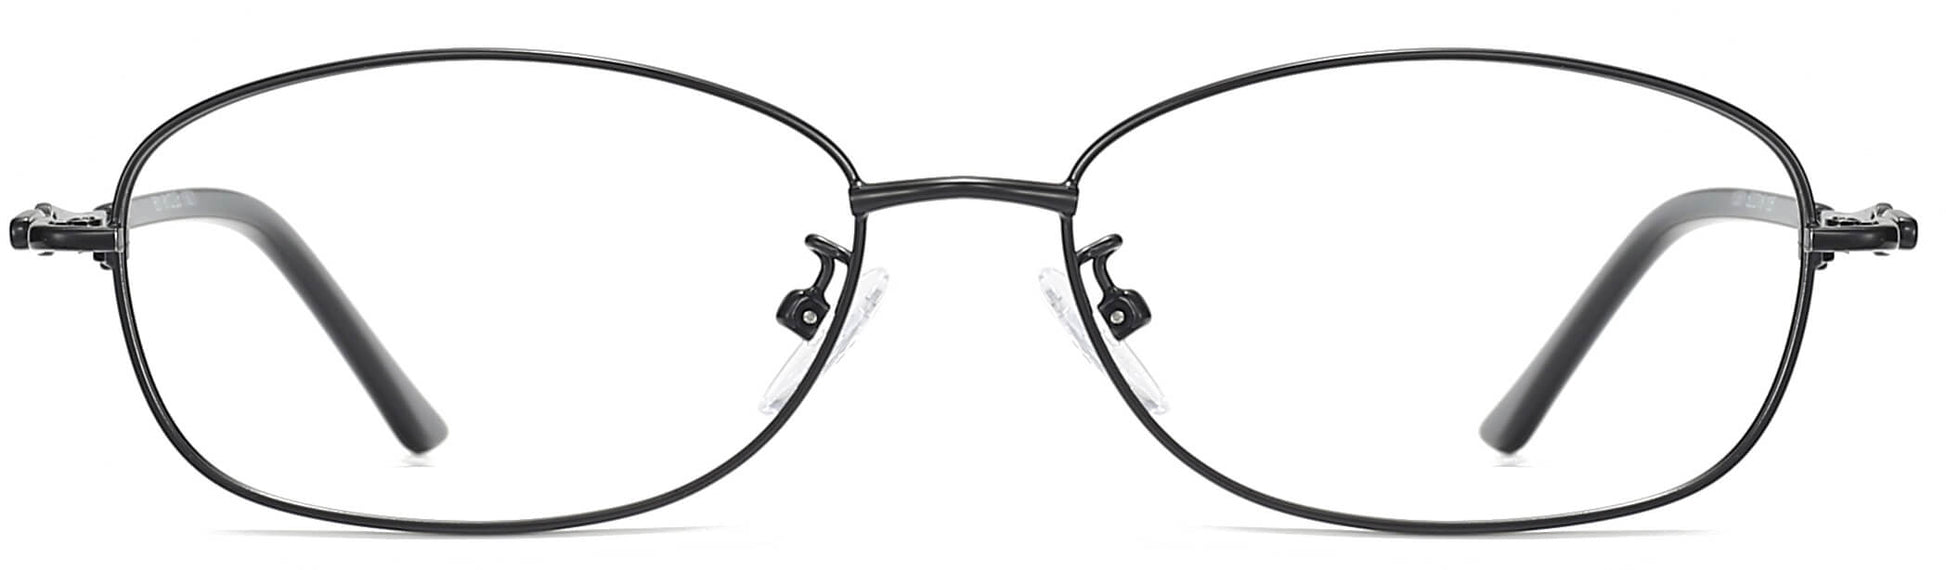 Kallie Round Black Eyeglasses from ANRRI, front view